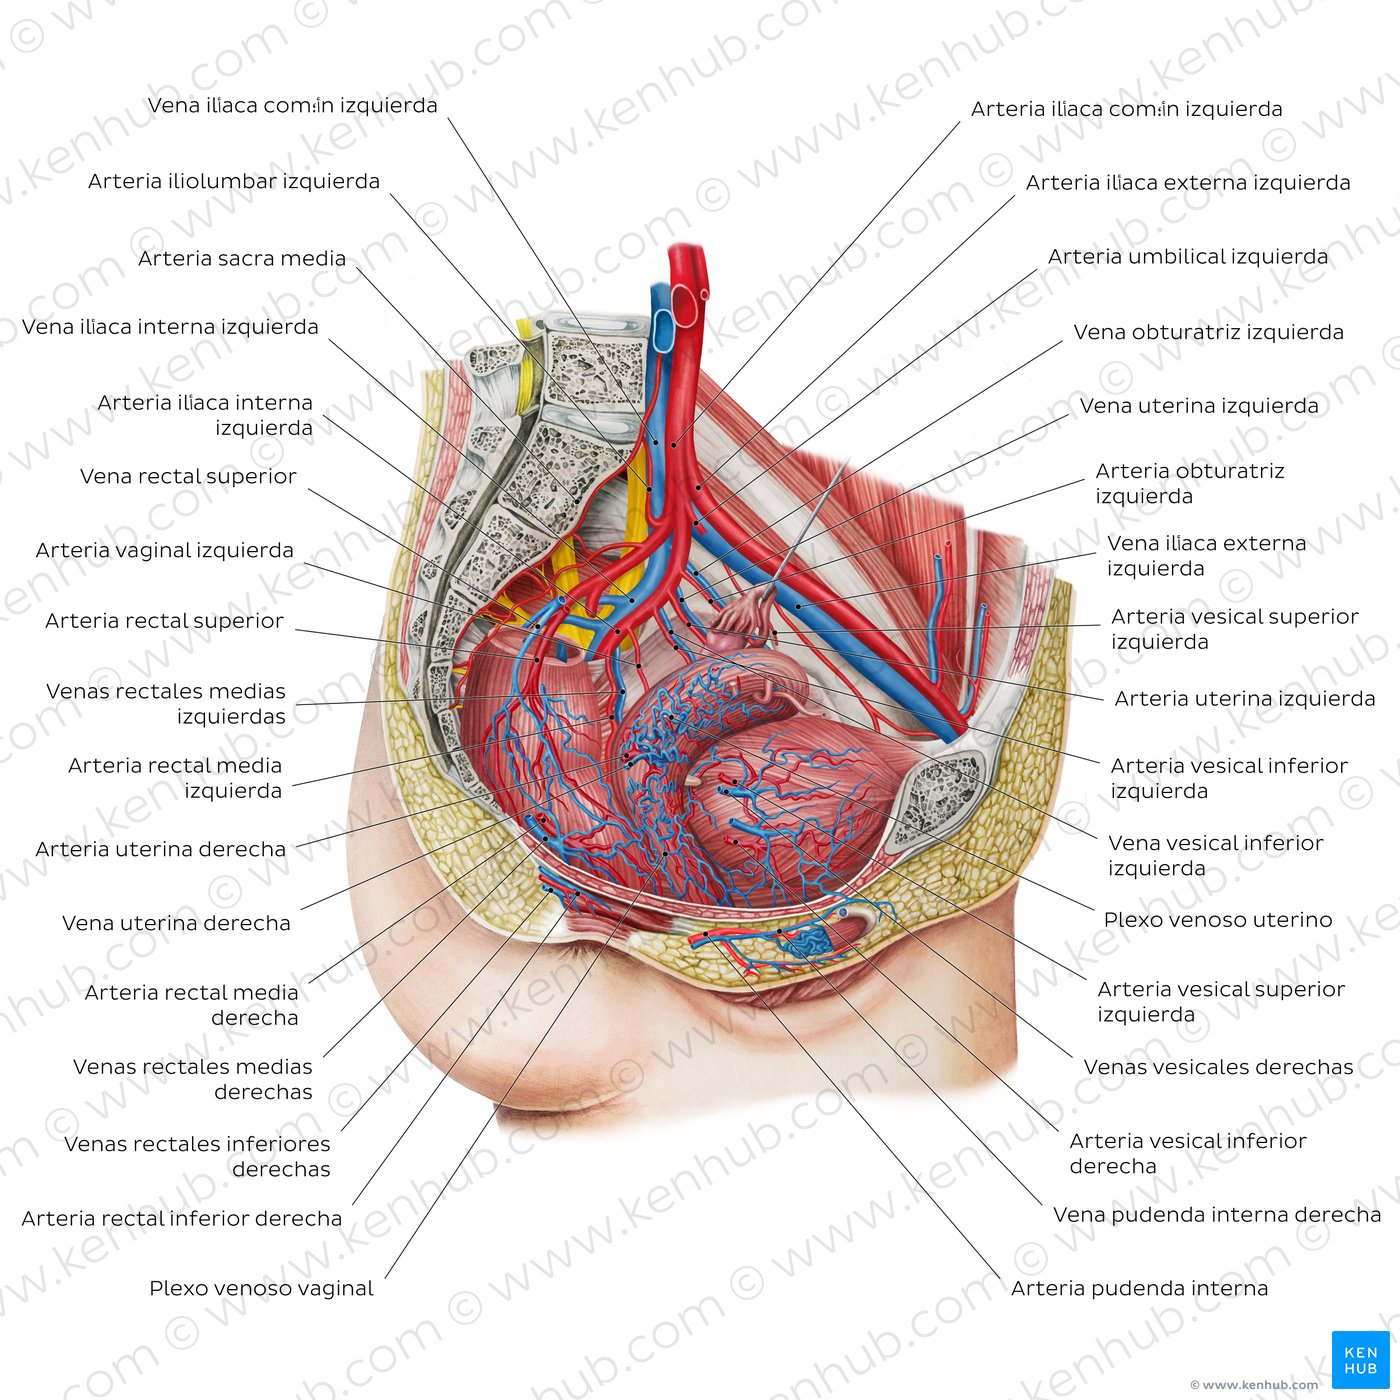 Arterias y venas de la pelvis femenina